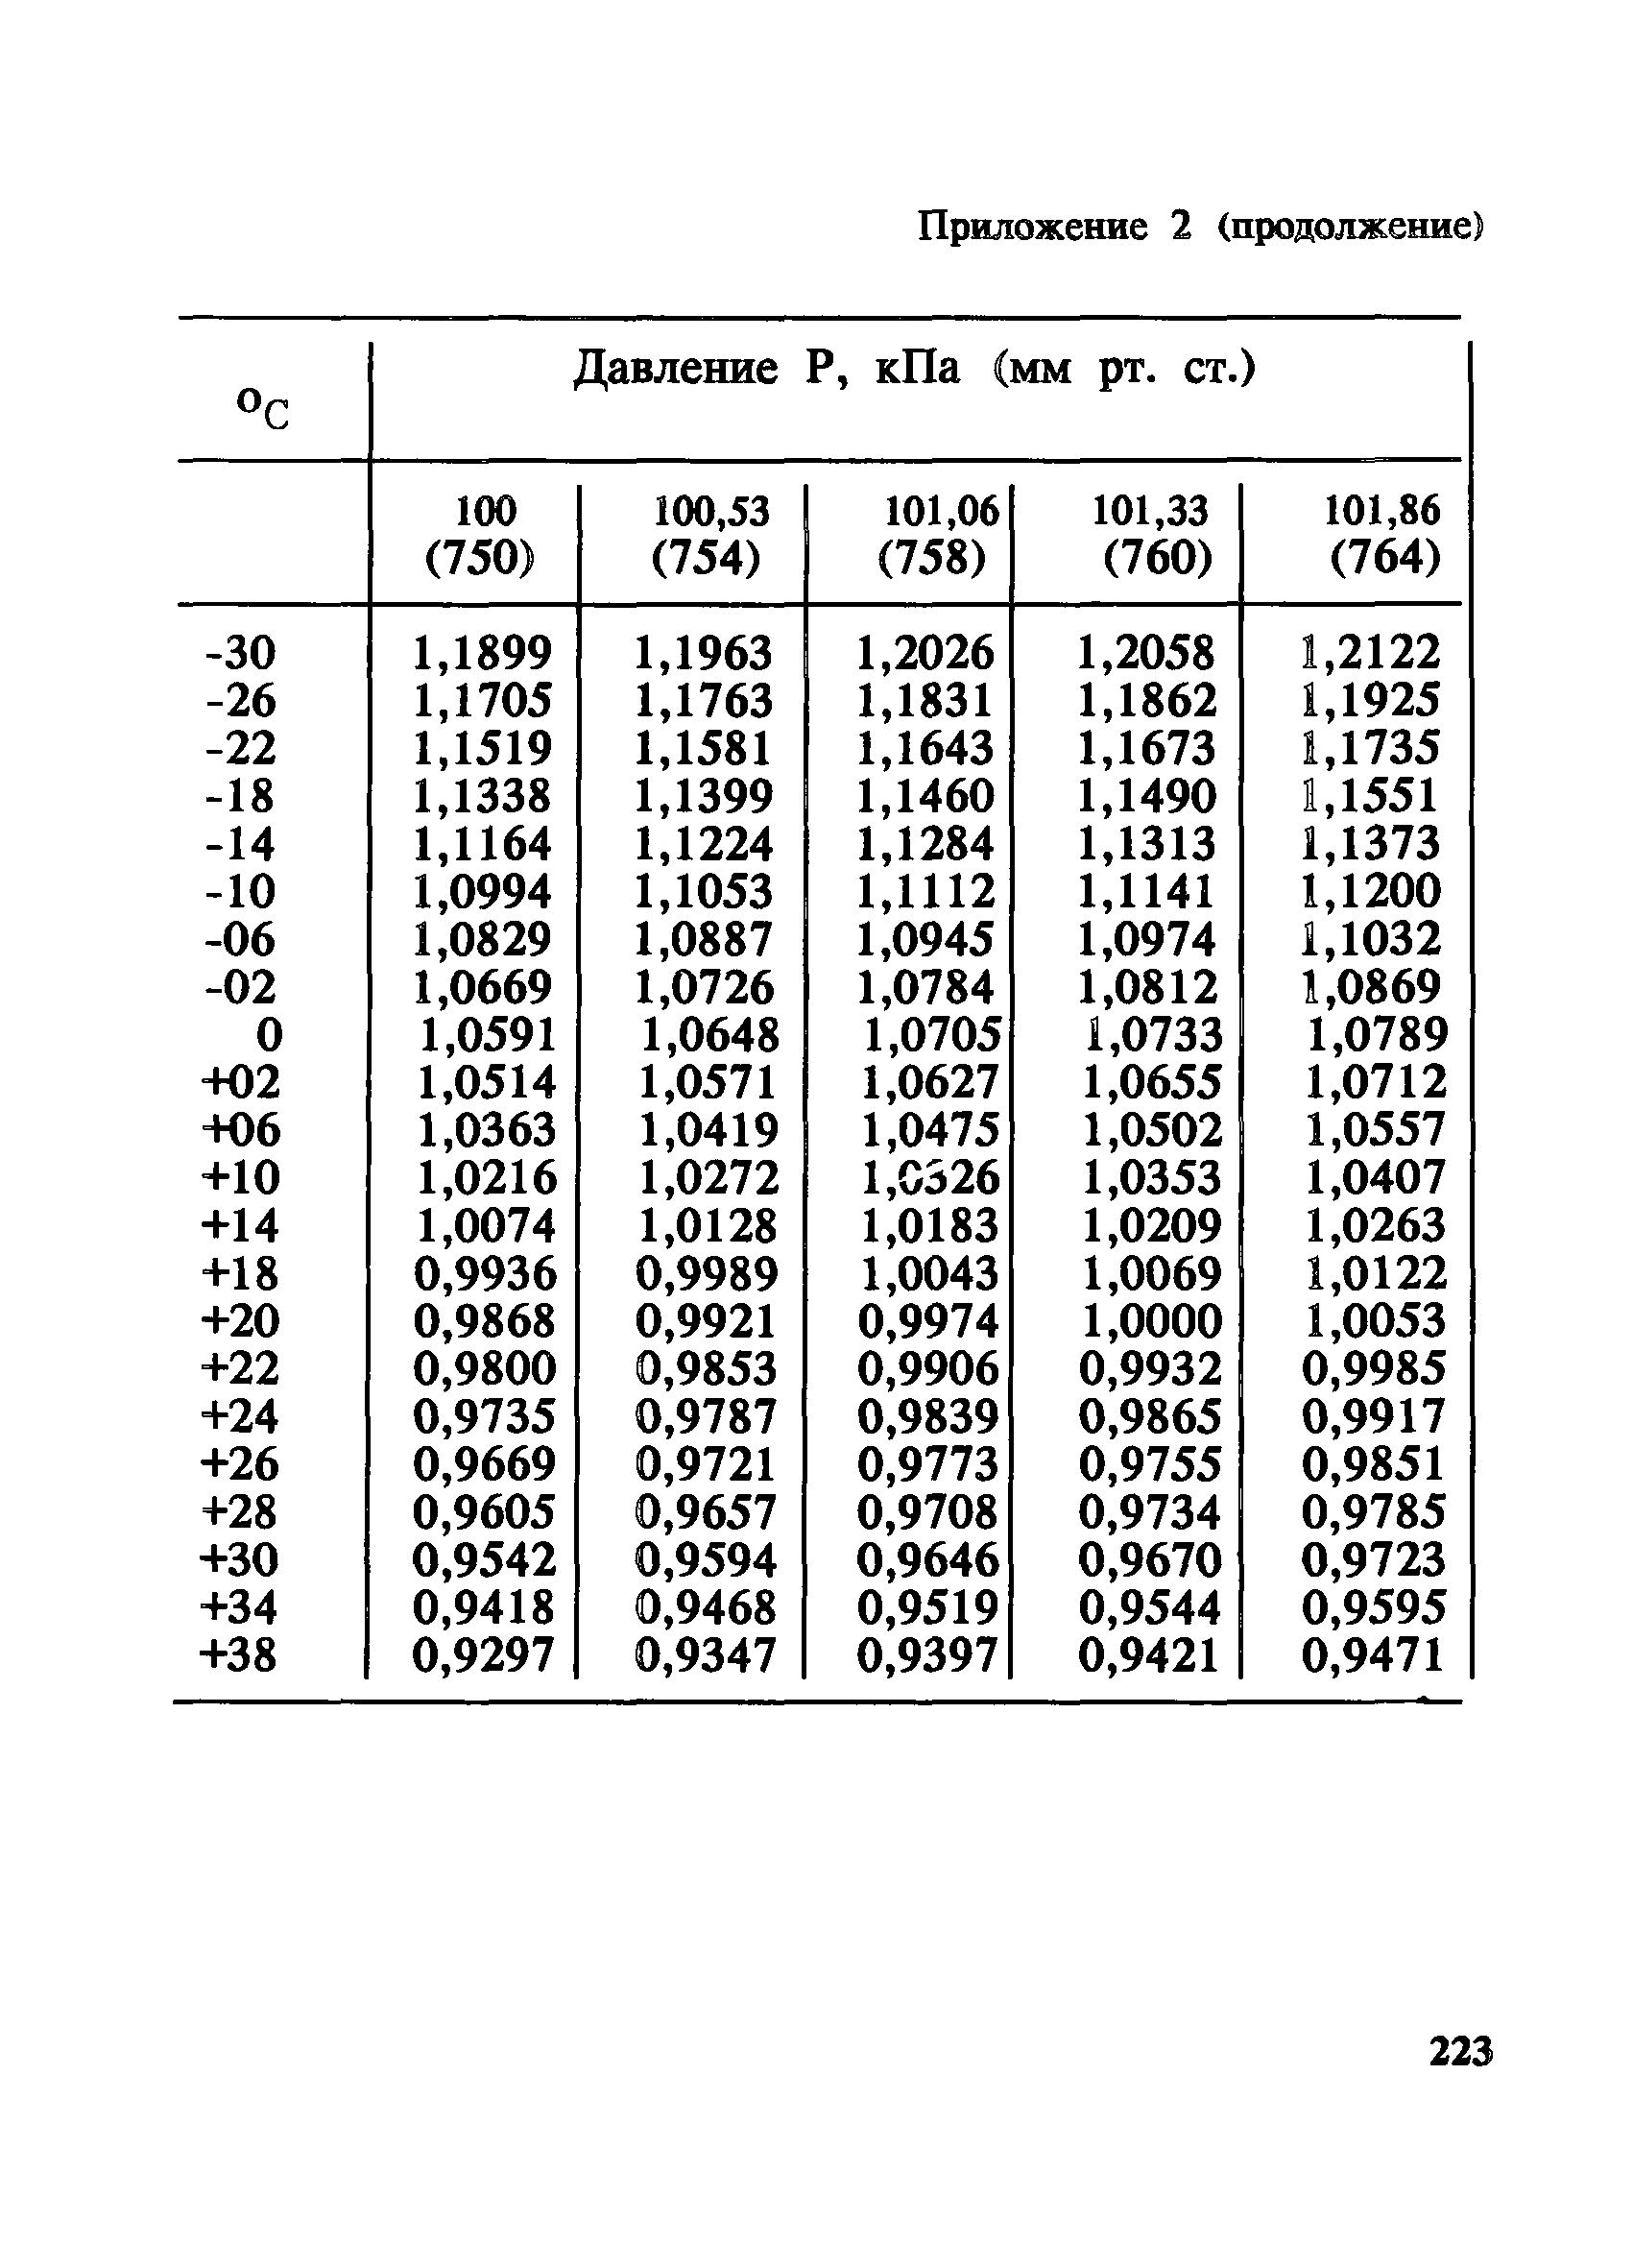 МУ 4915-88